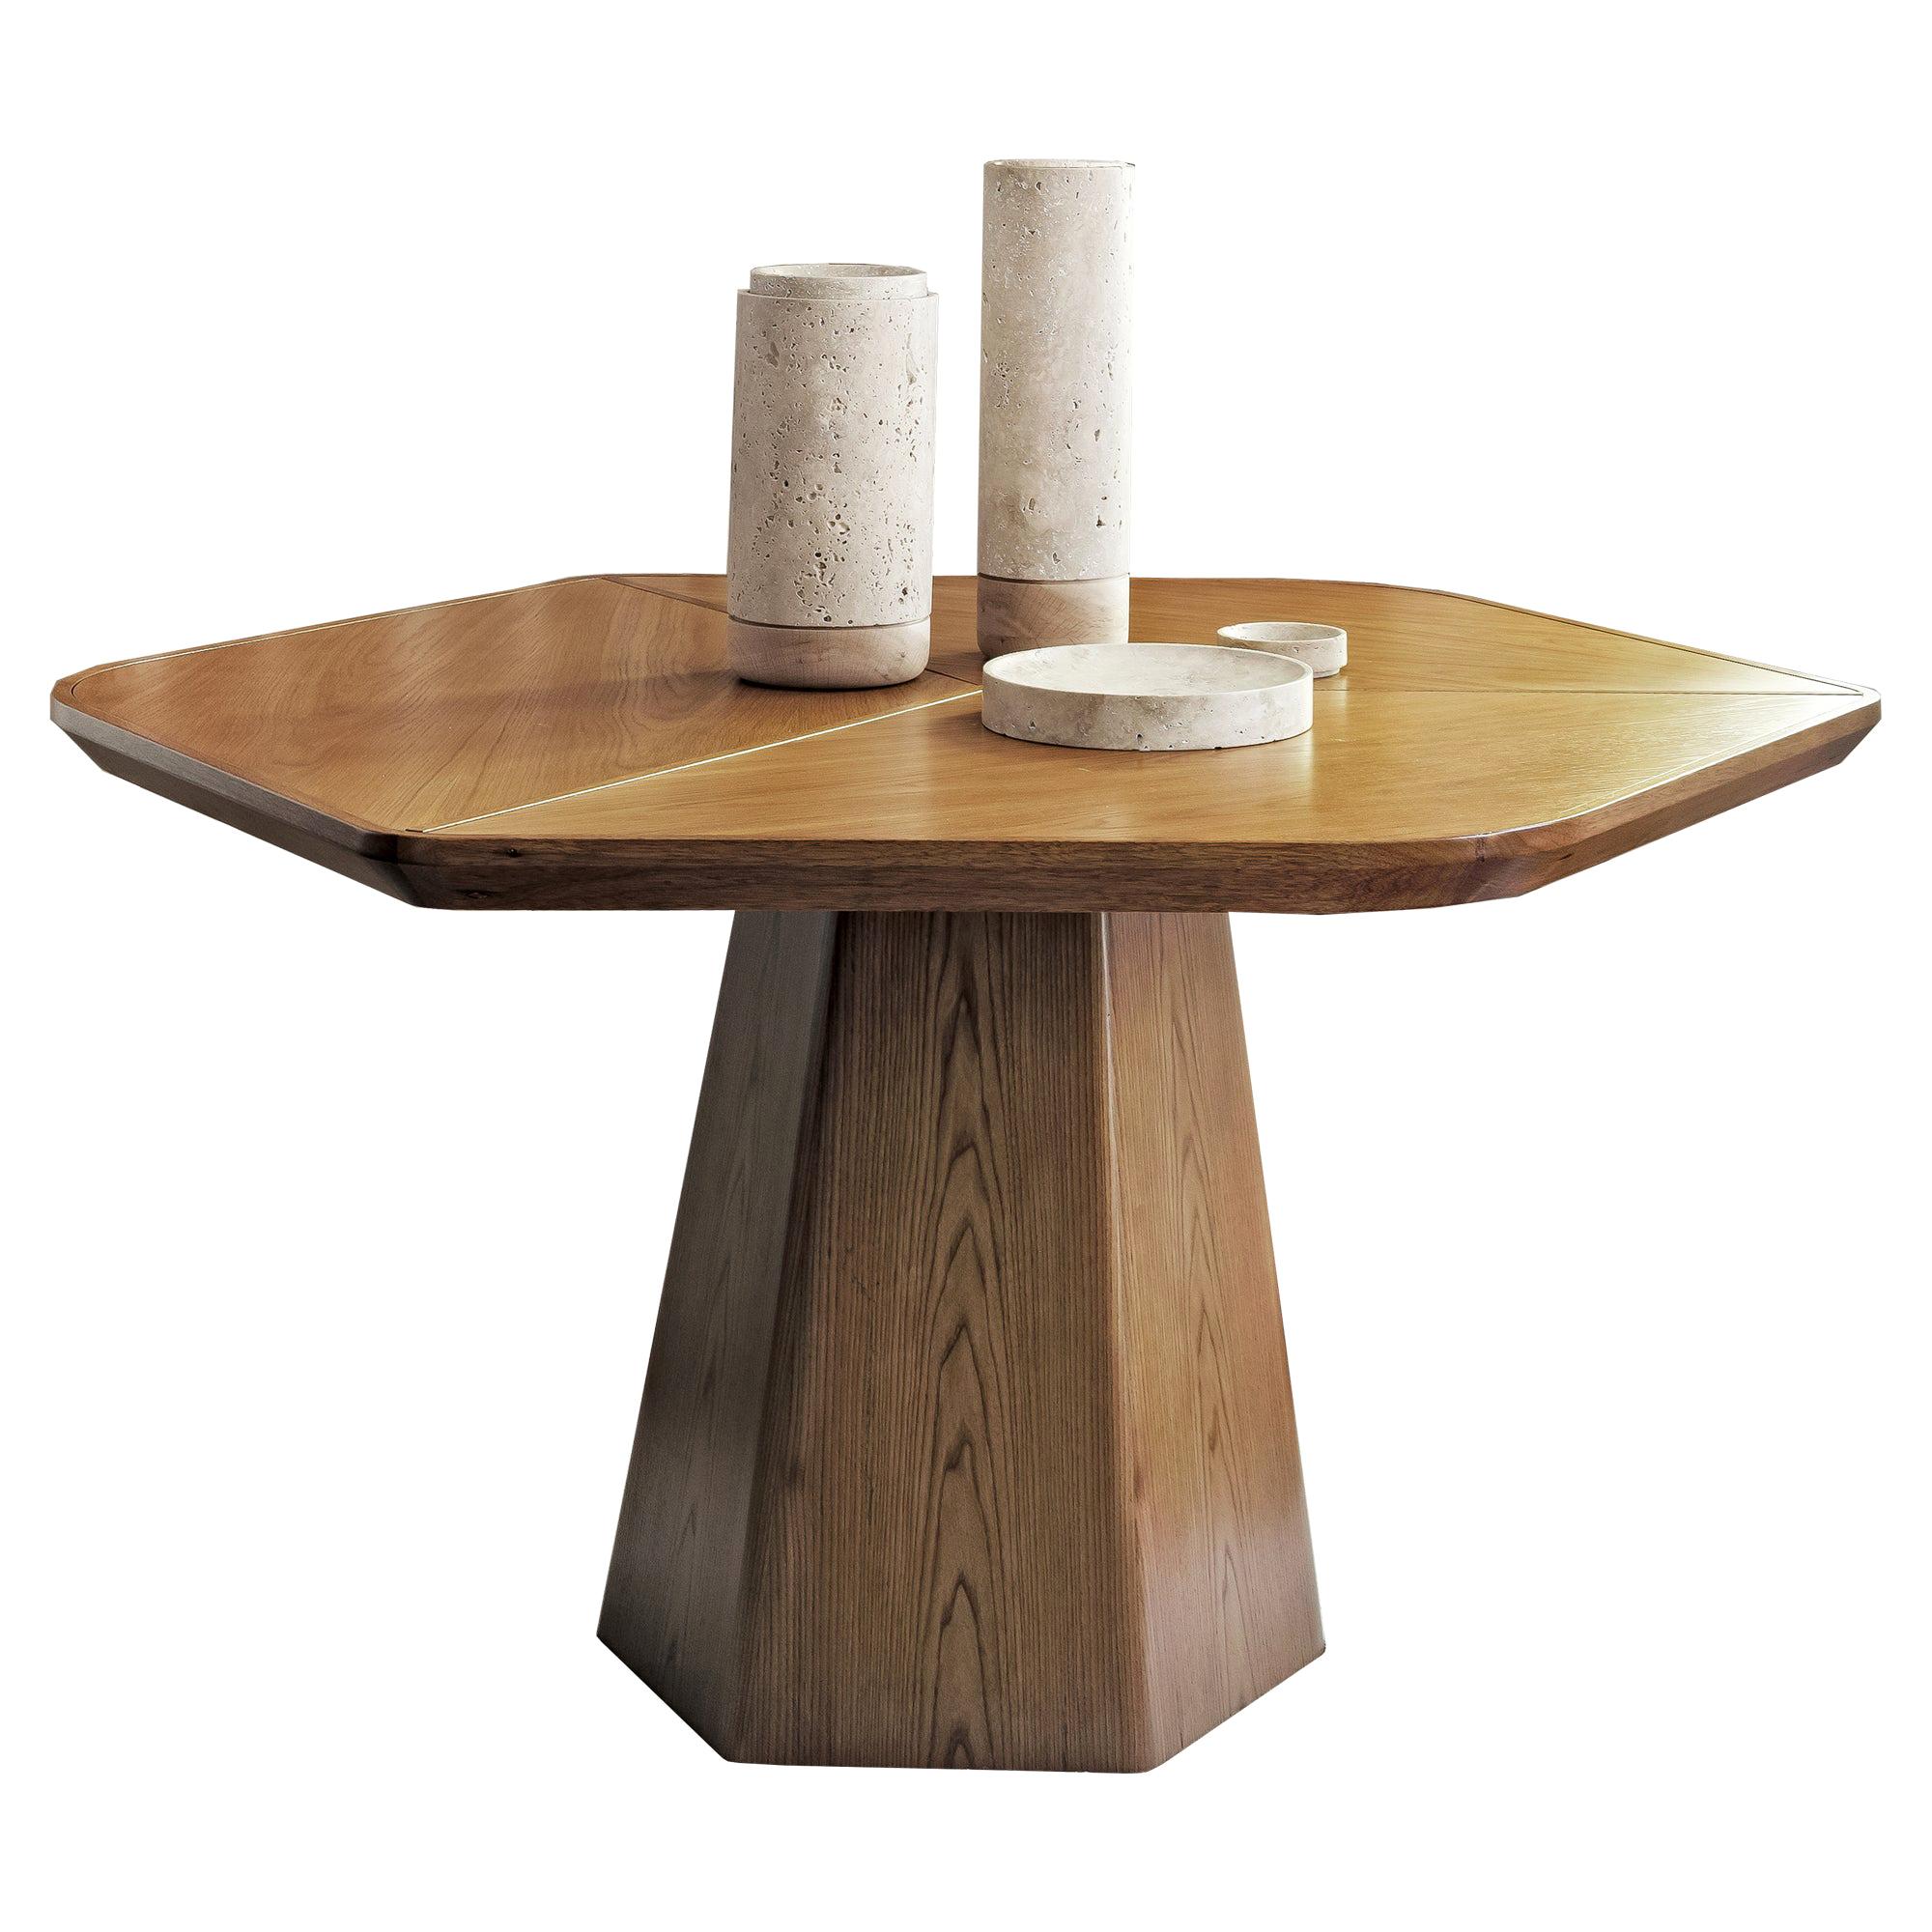 21st Century, Modern, Wood, Hexagonal, Sculptural, Evolve Dining Table